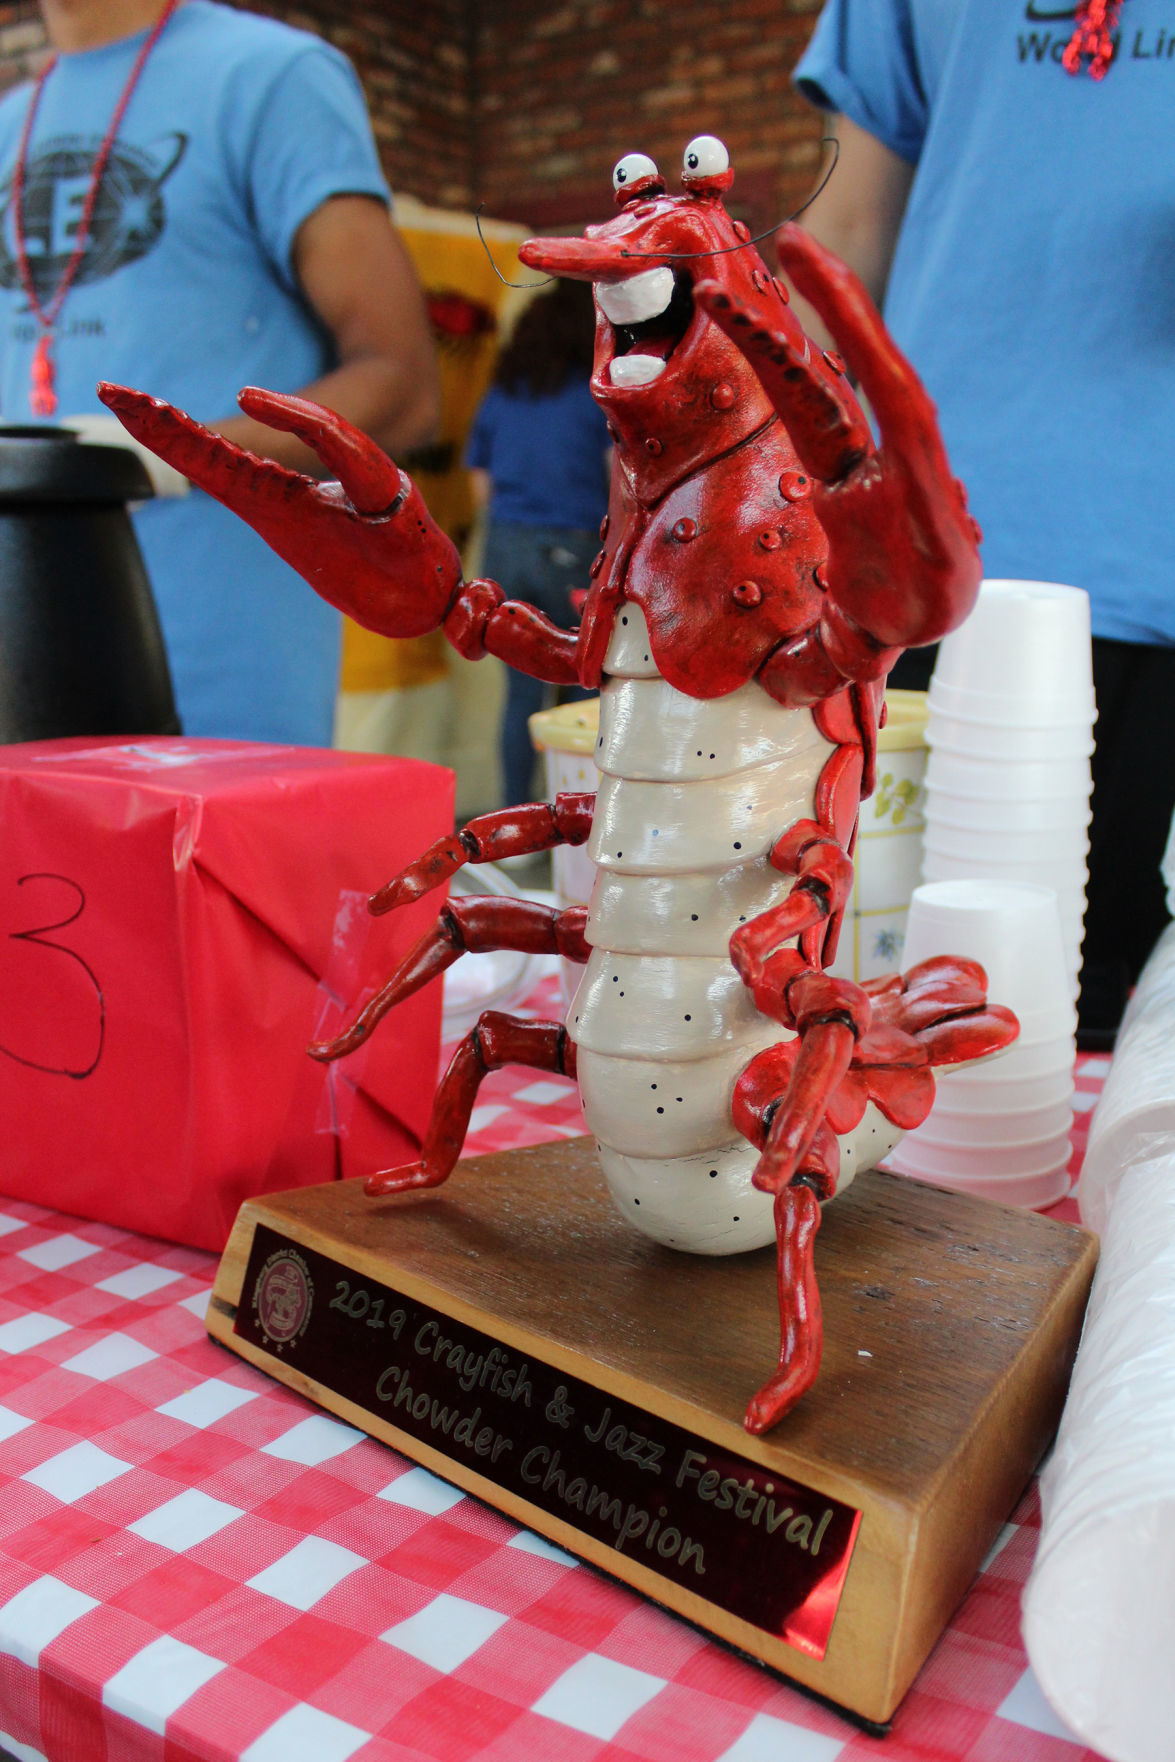 Crayfish Festival brings Cajun flair to Kingsburg Community